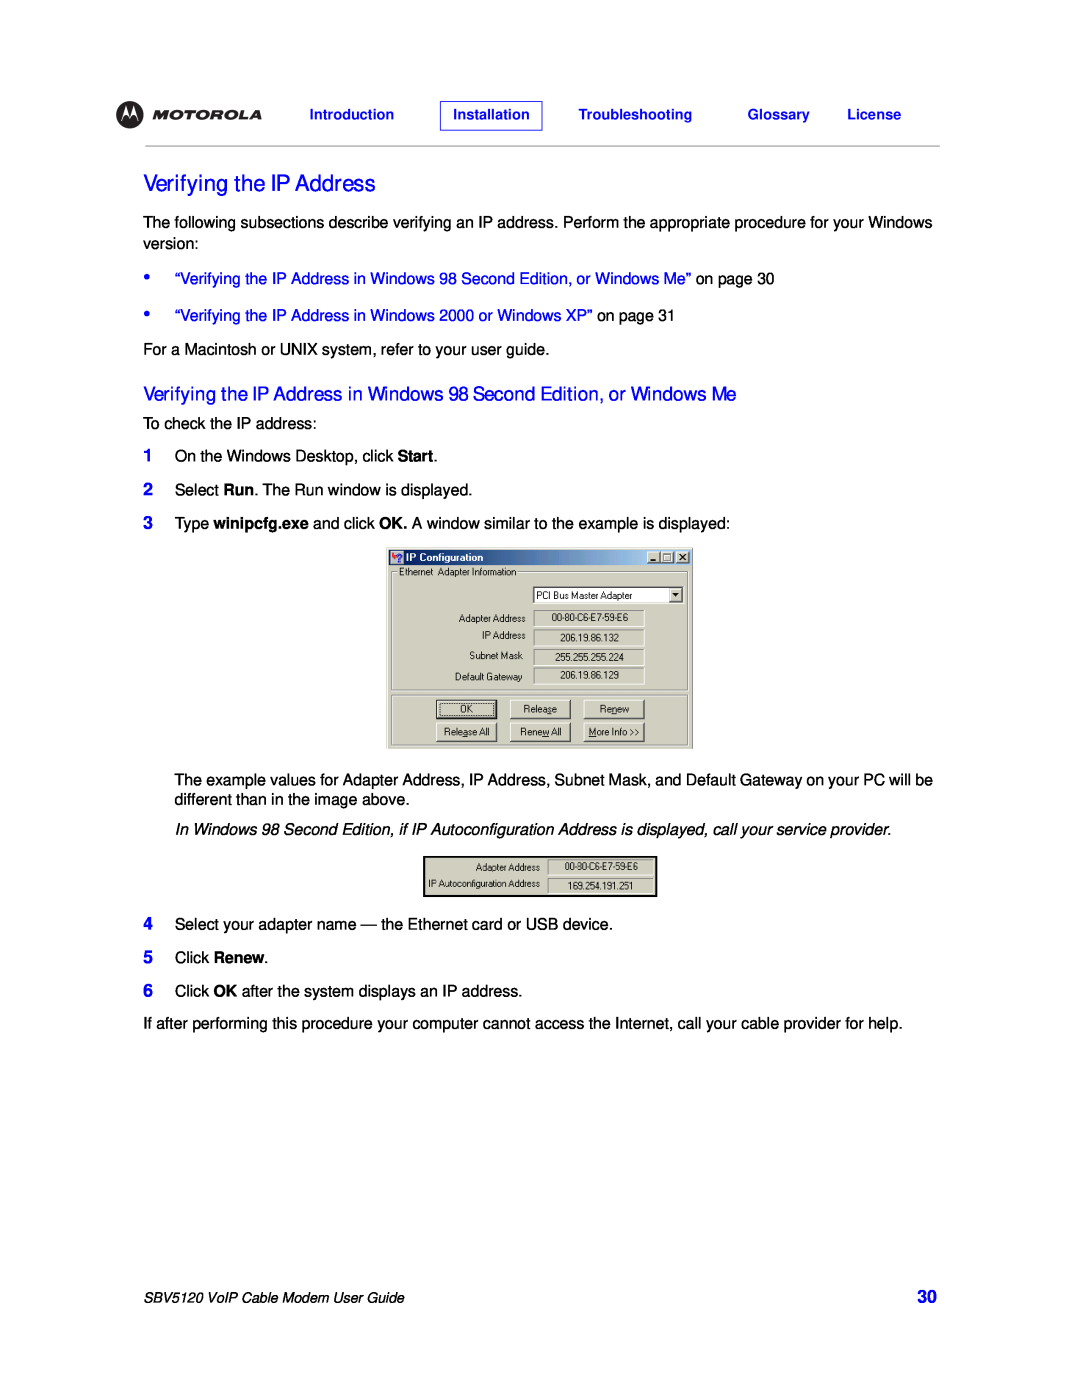 Motorola SBV5120 manual Verifying the IP Address in Windows 98 Second Edition, or Windows Me 